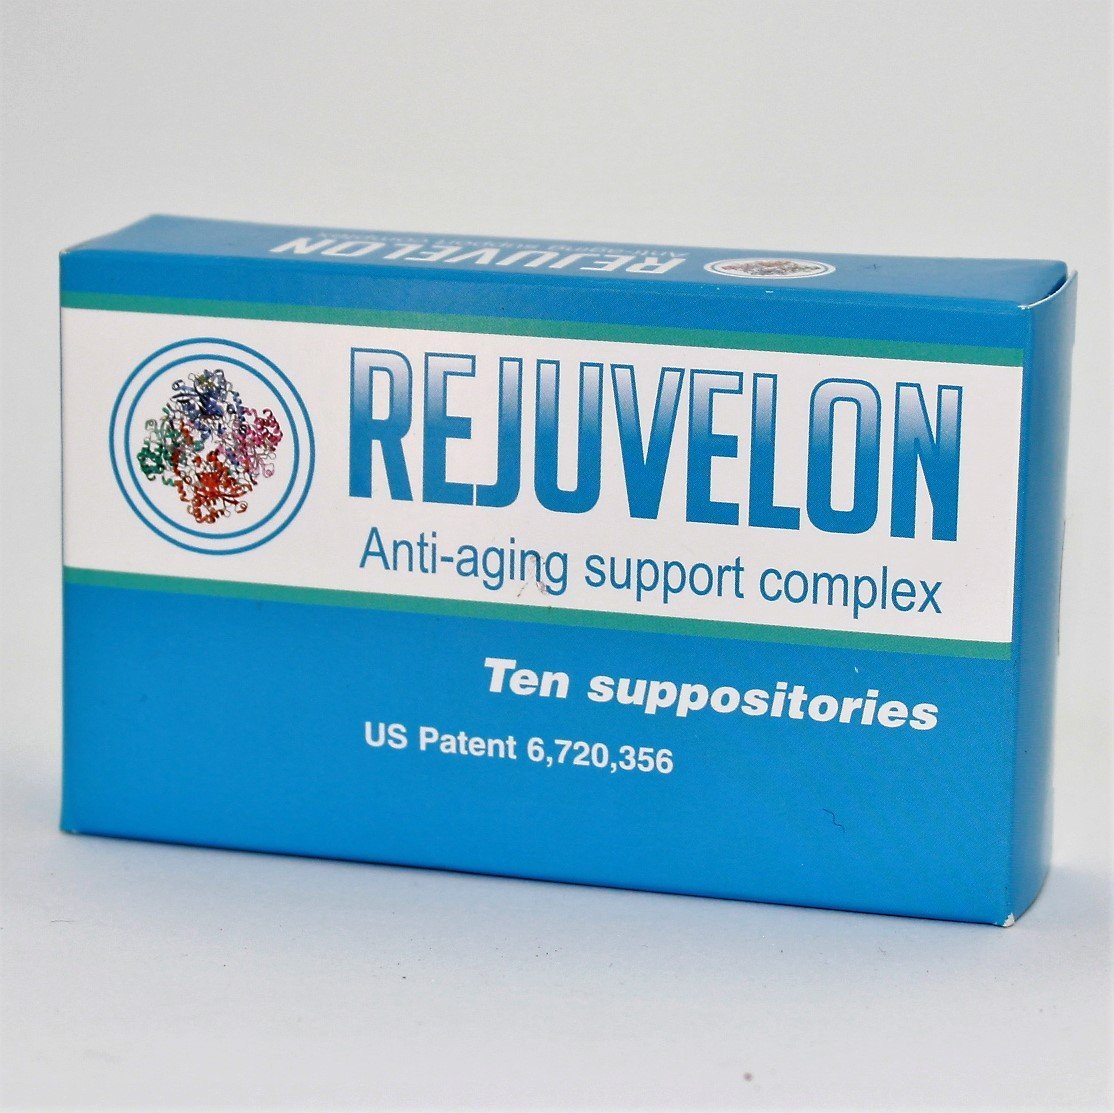 Rejuvelon: Antioxidant Support Complex (10 Suppositories)